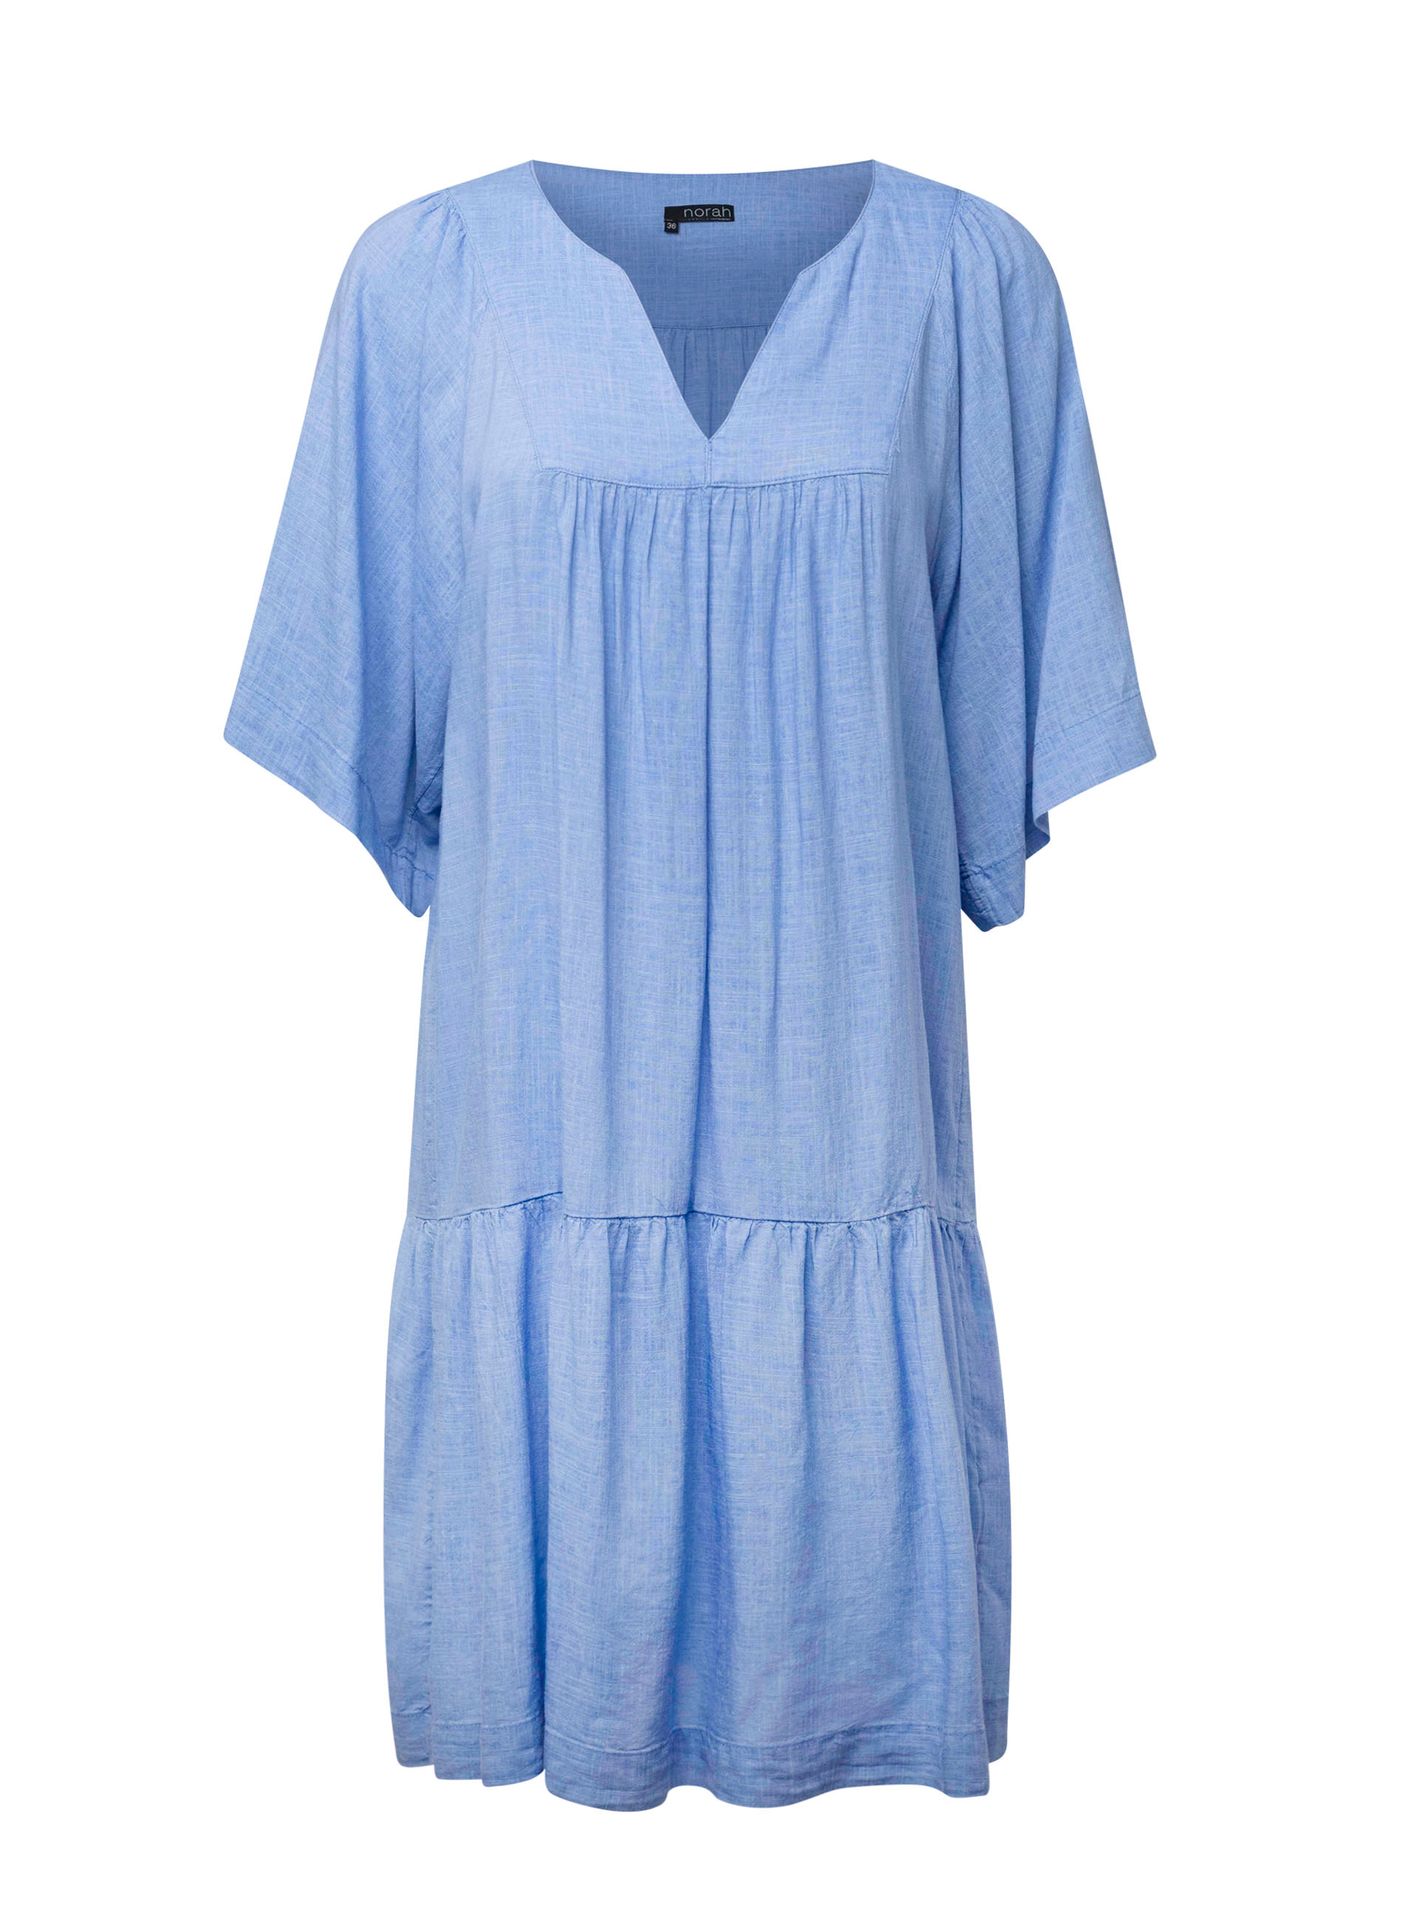 Norah Lichtblauwe midi jurk light blue 213719-401